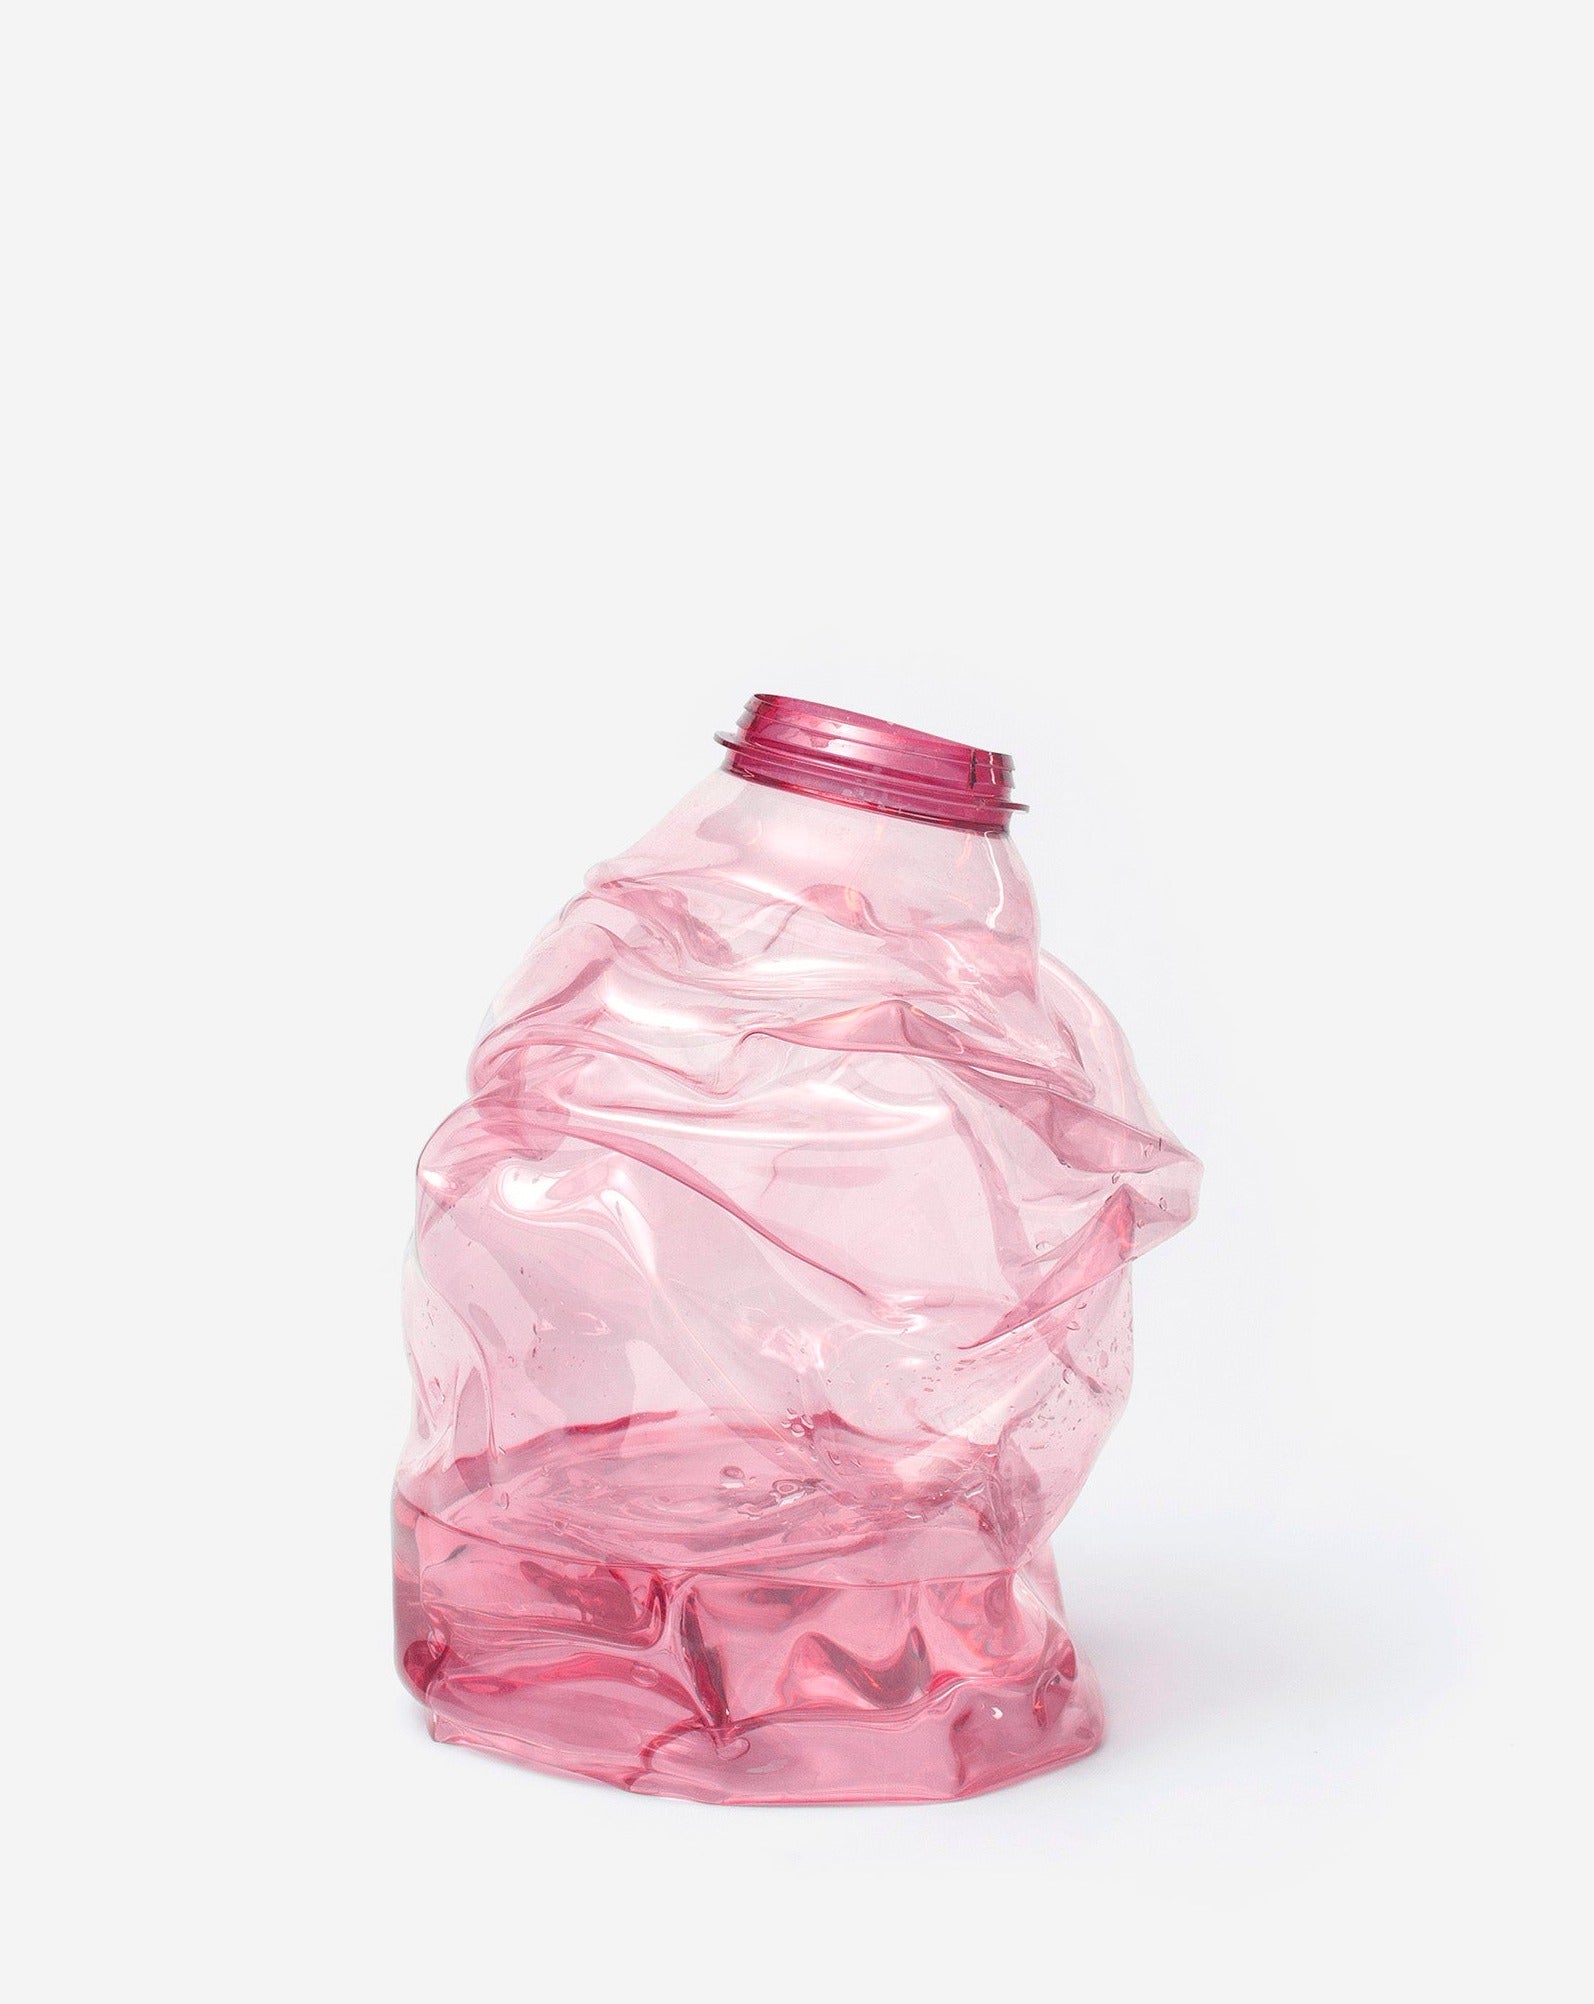 Medium pink handmade recycled plastic vase on white background